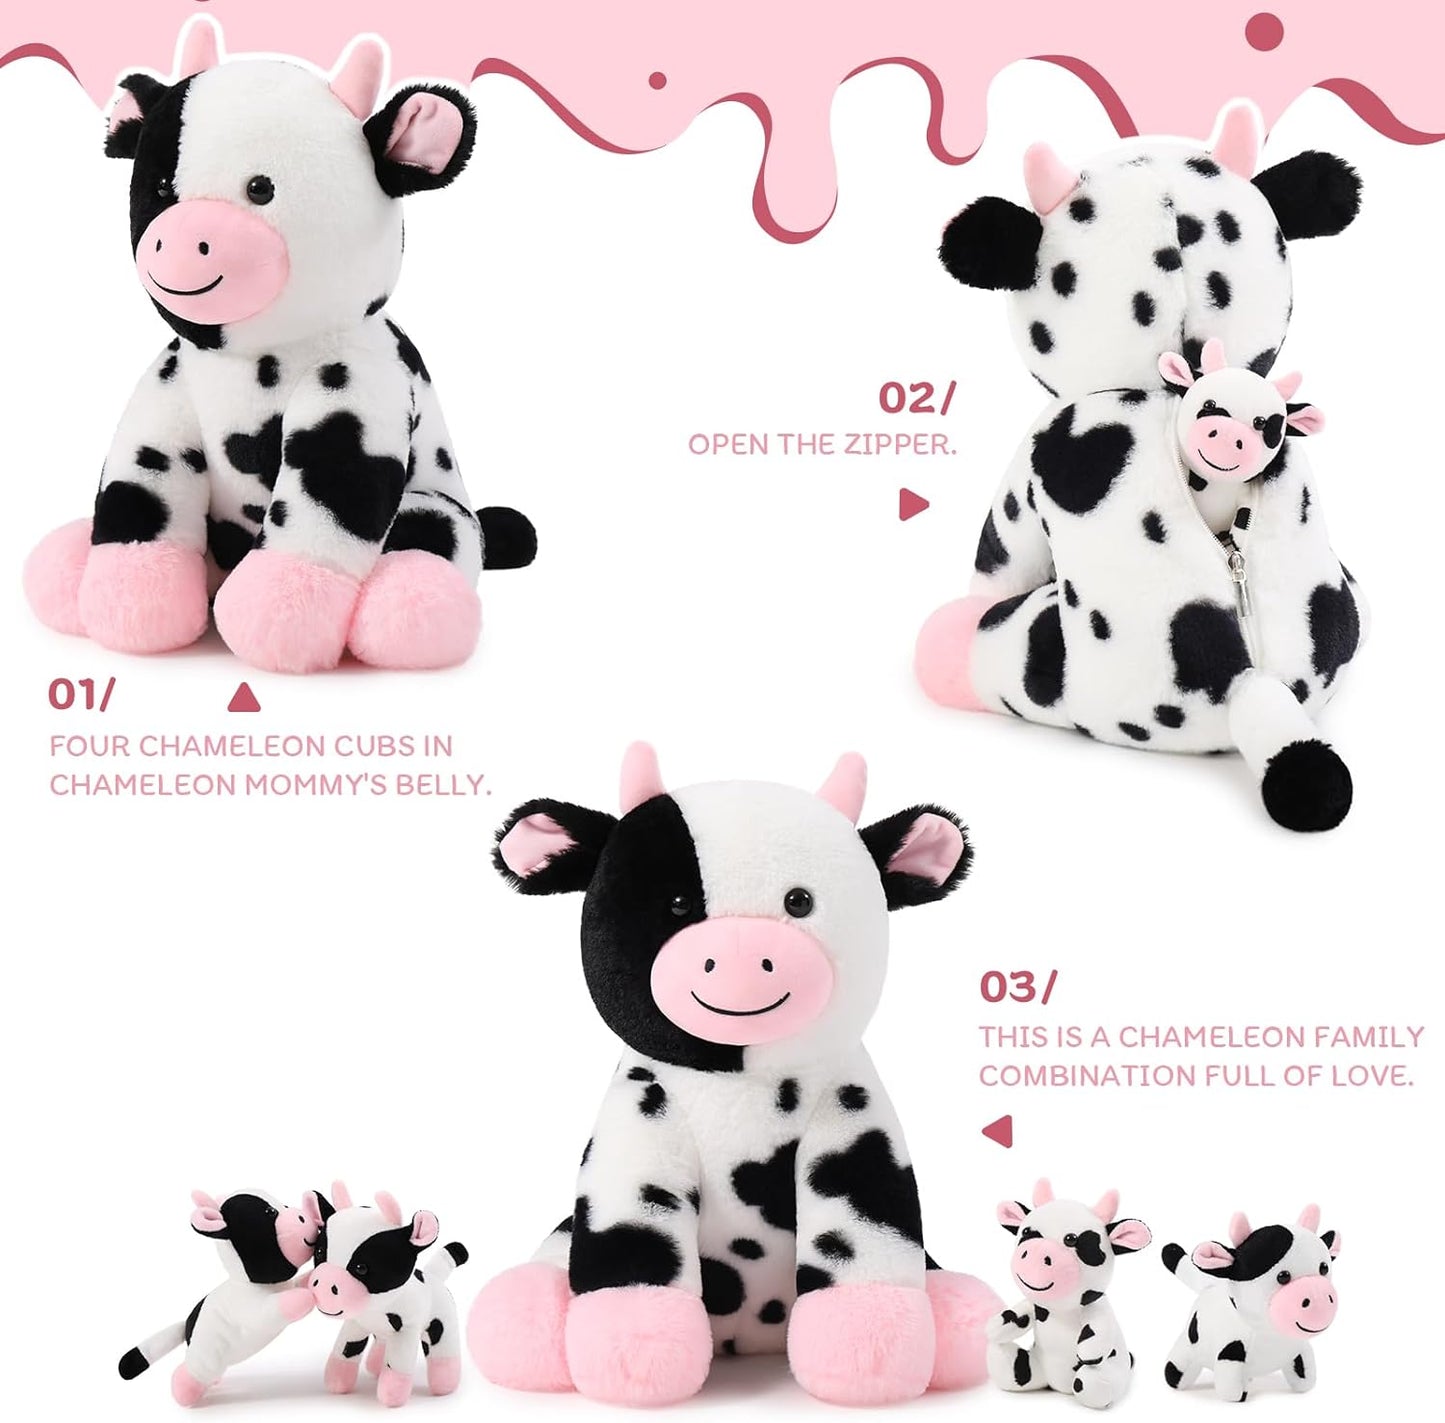 Dairy Cattle Plush Toys, Balck&White, 14.6 Inches - MorisMos Stuffed Animals